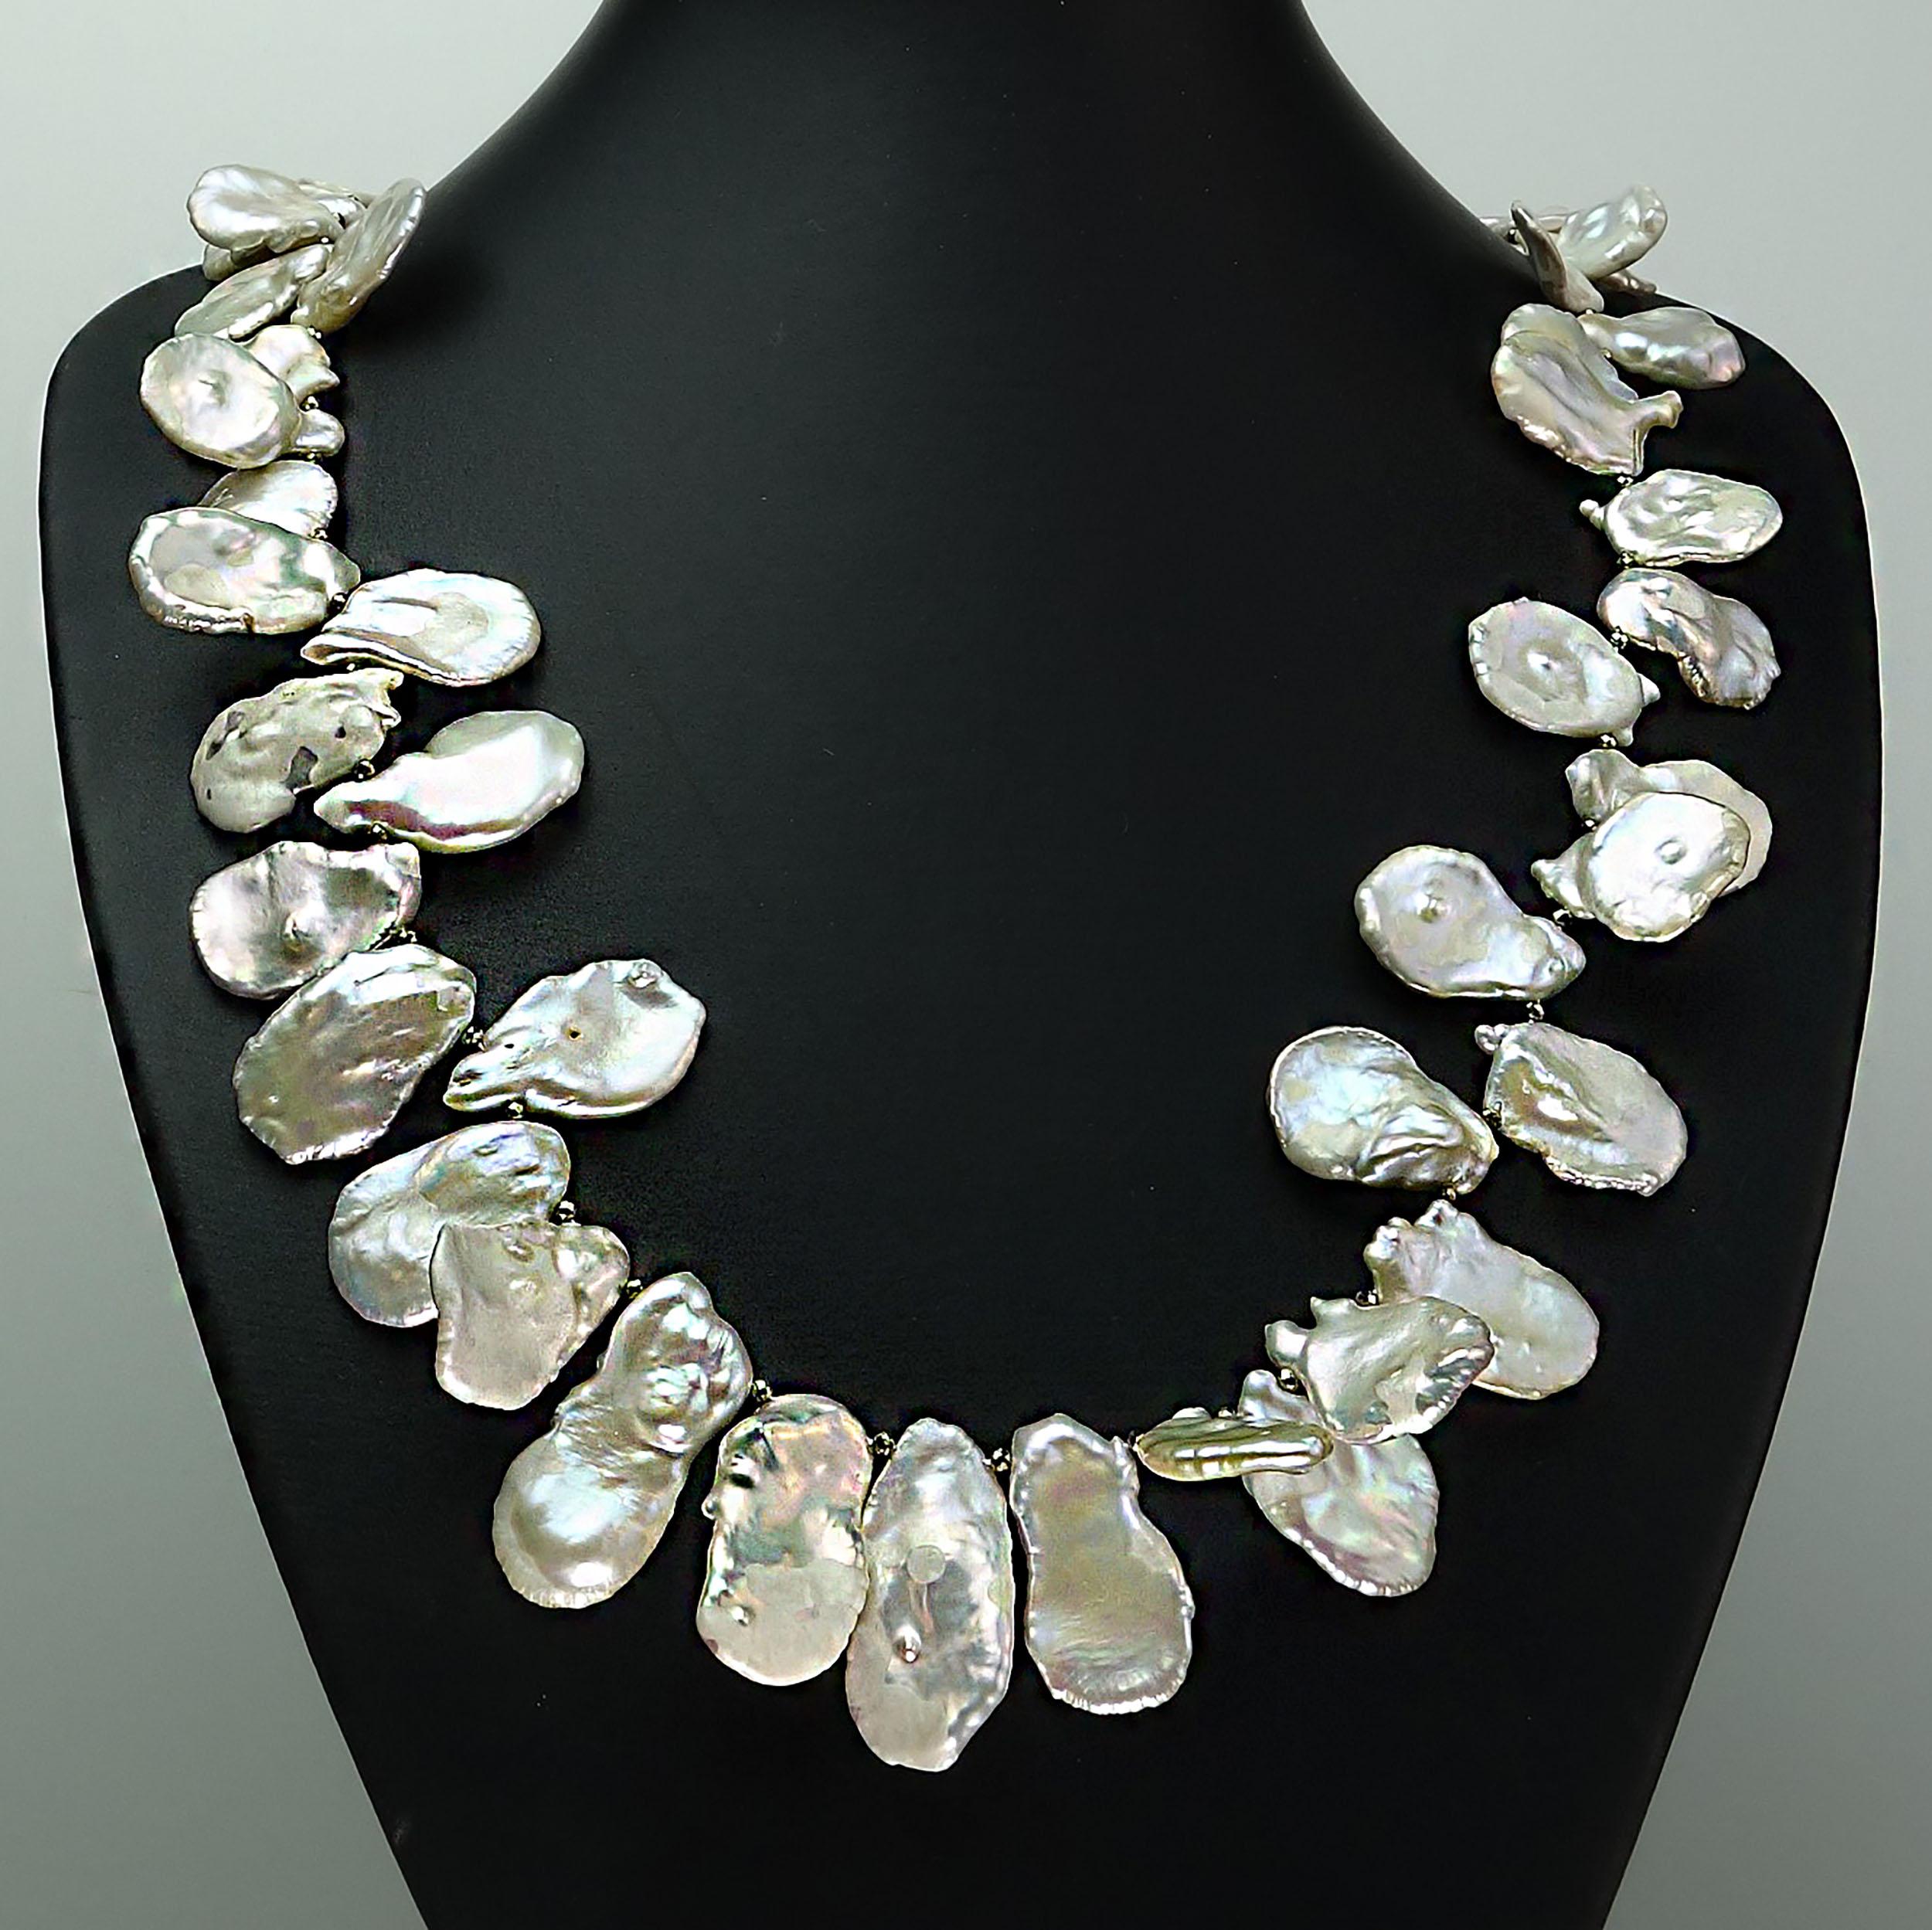 Artisan AJD Matinee Long collier de perles Keshi blanches et iridescentes, pierre de naissance de juin